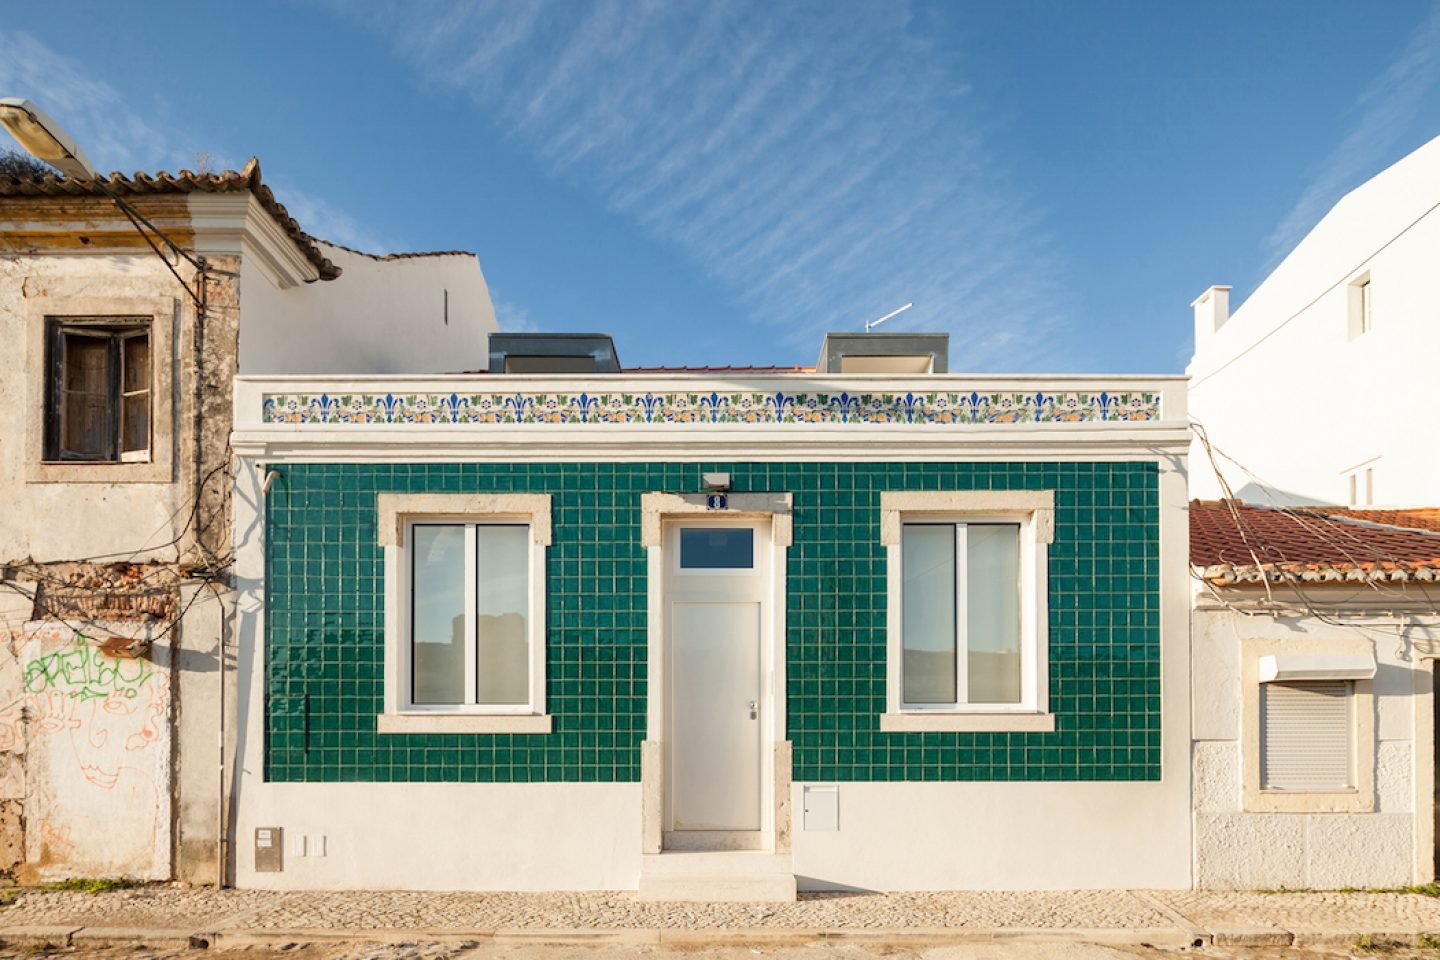 CAIS / House Refurbishment in Ajuda / Lisboa, Portugal / 2015